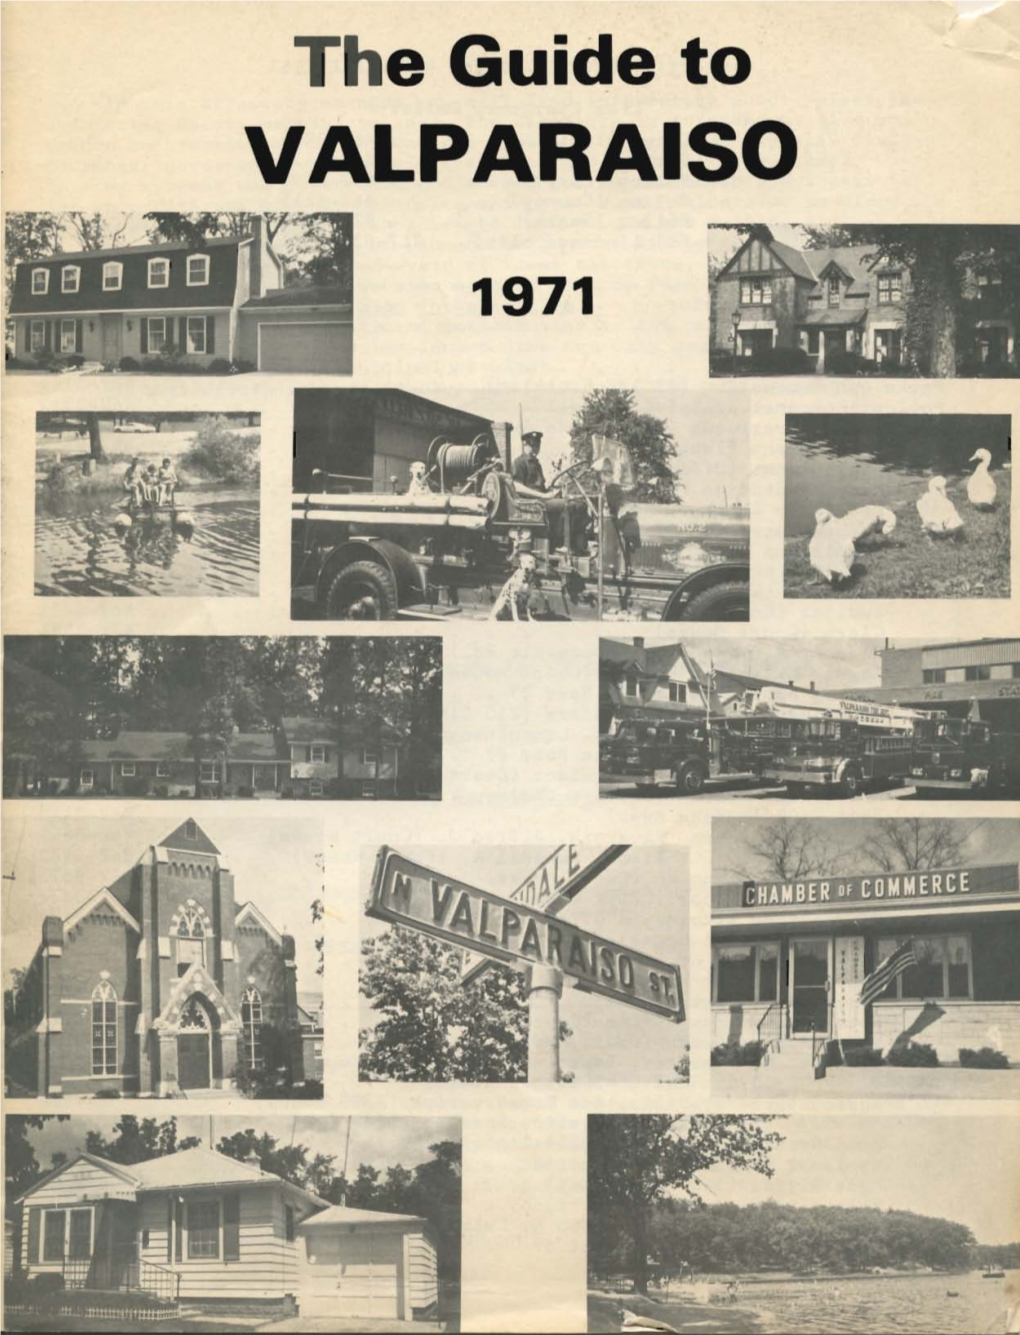 The Guide to Valparaiso, 1971